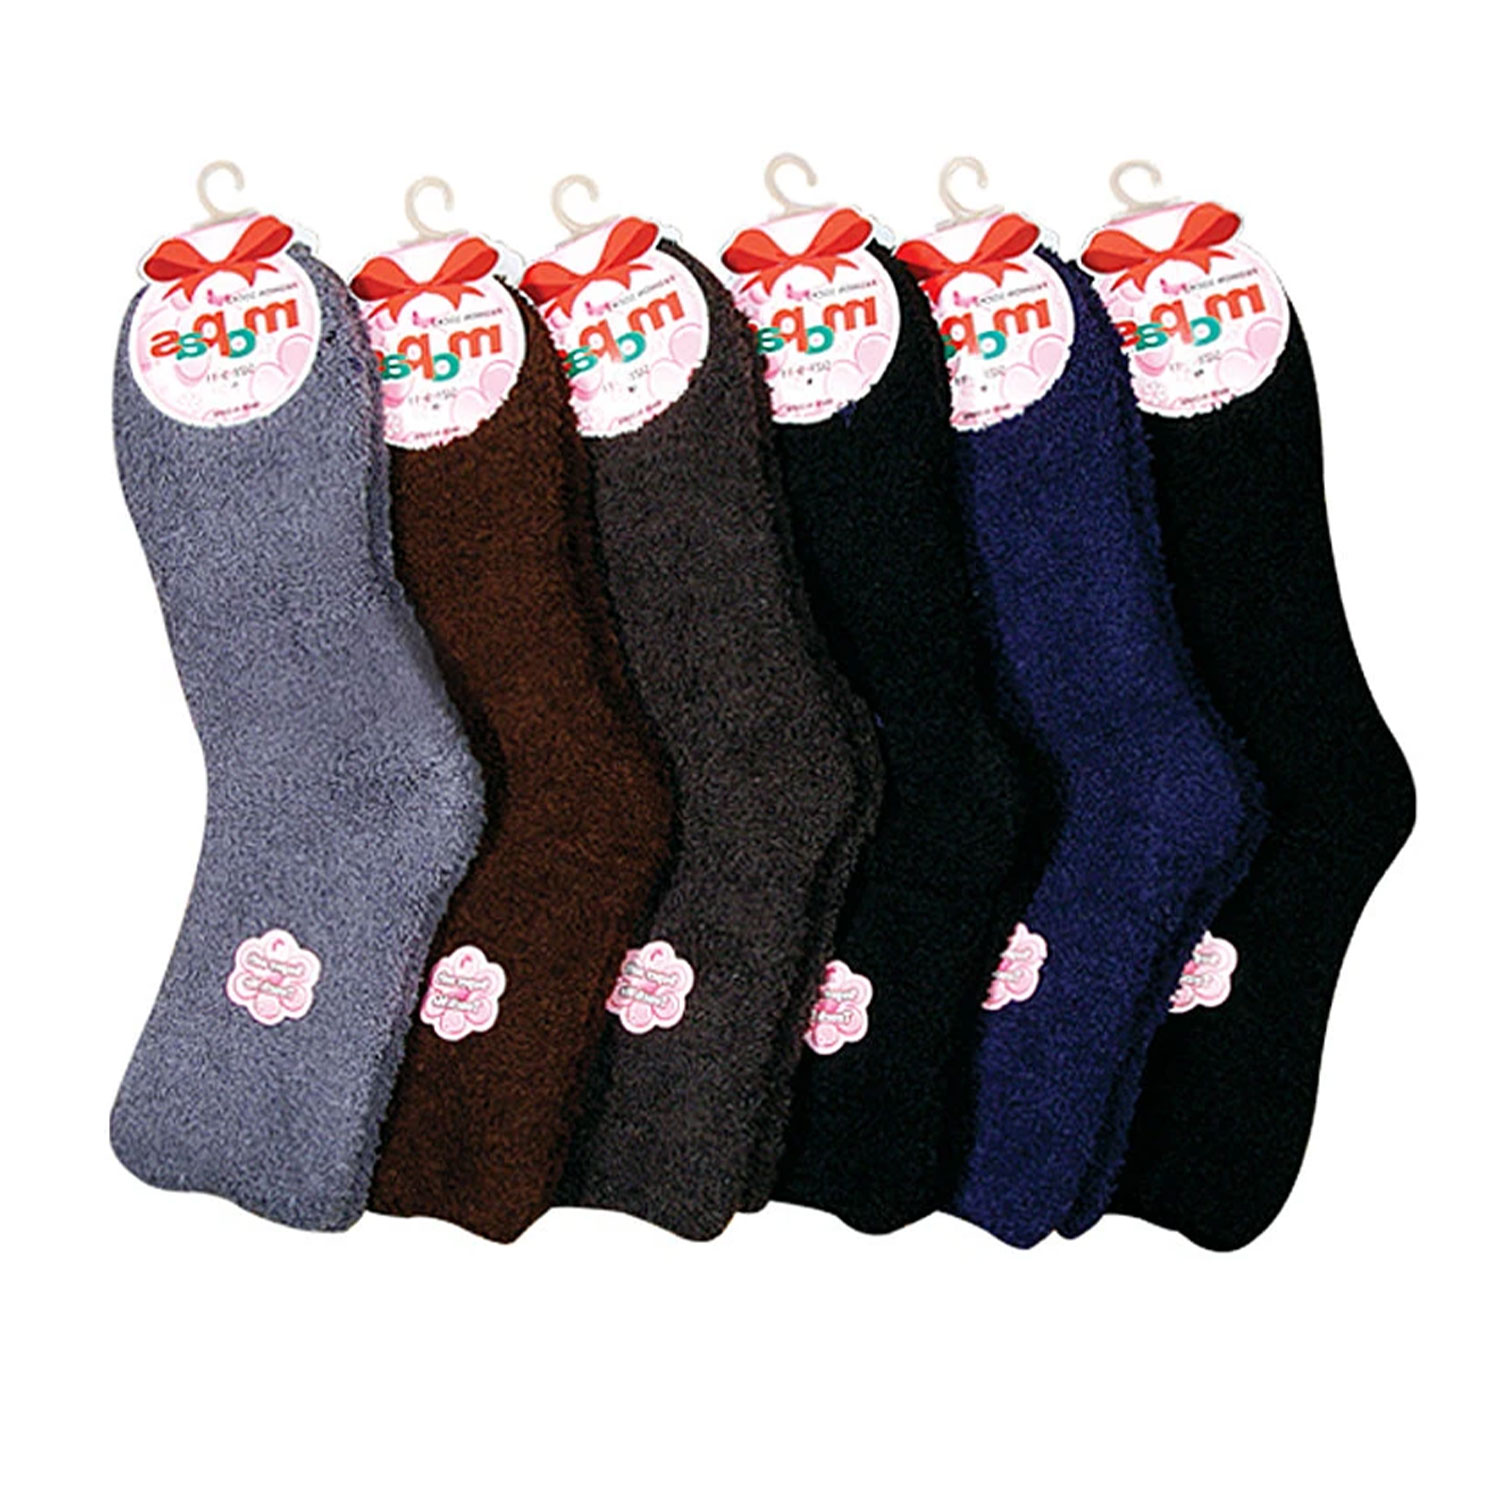 6 Pack Ladies Plush Soft Socks